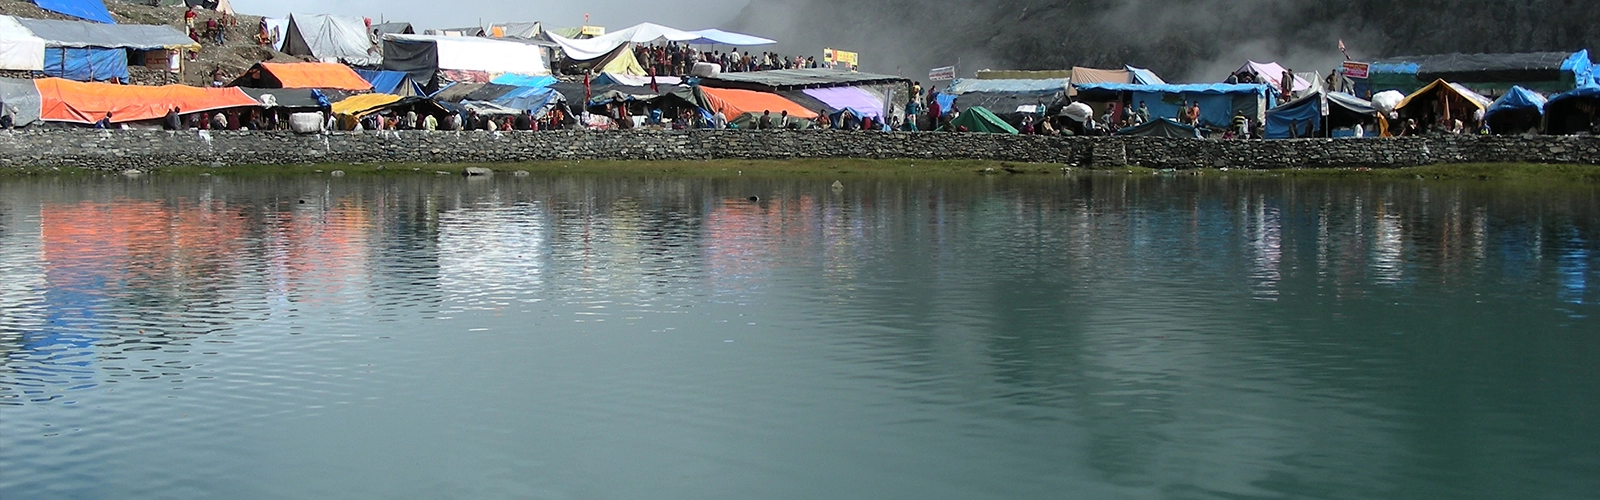 Manimahesh Lake in Himachal Pradesh